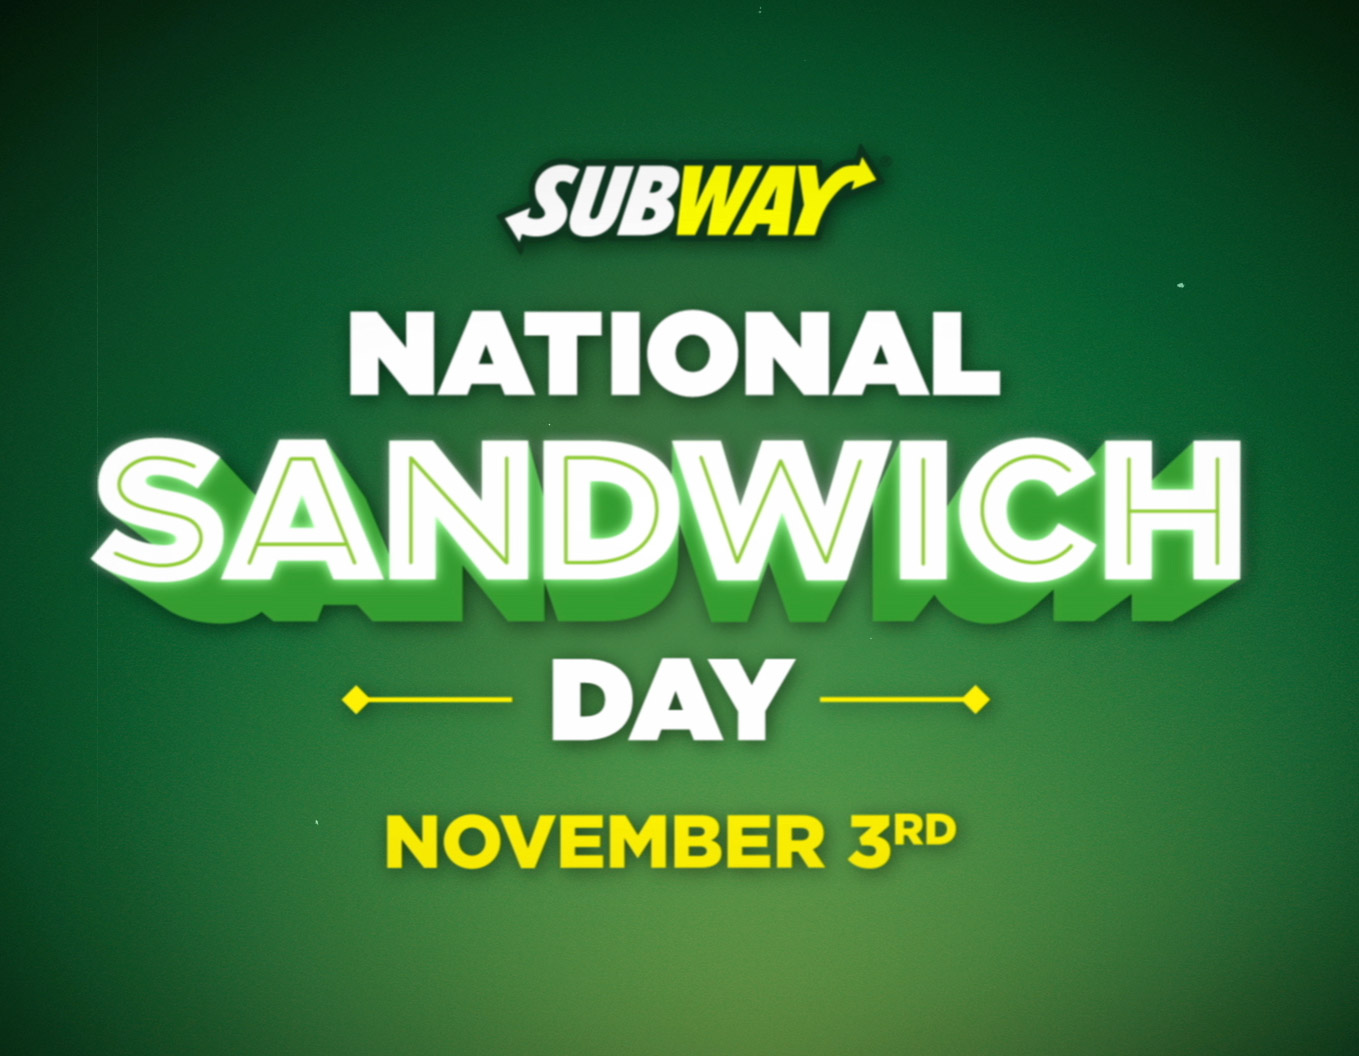 Subway: National Sandwich Day